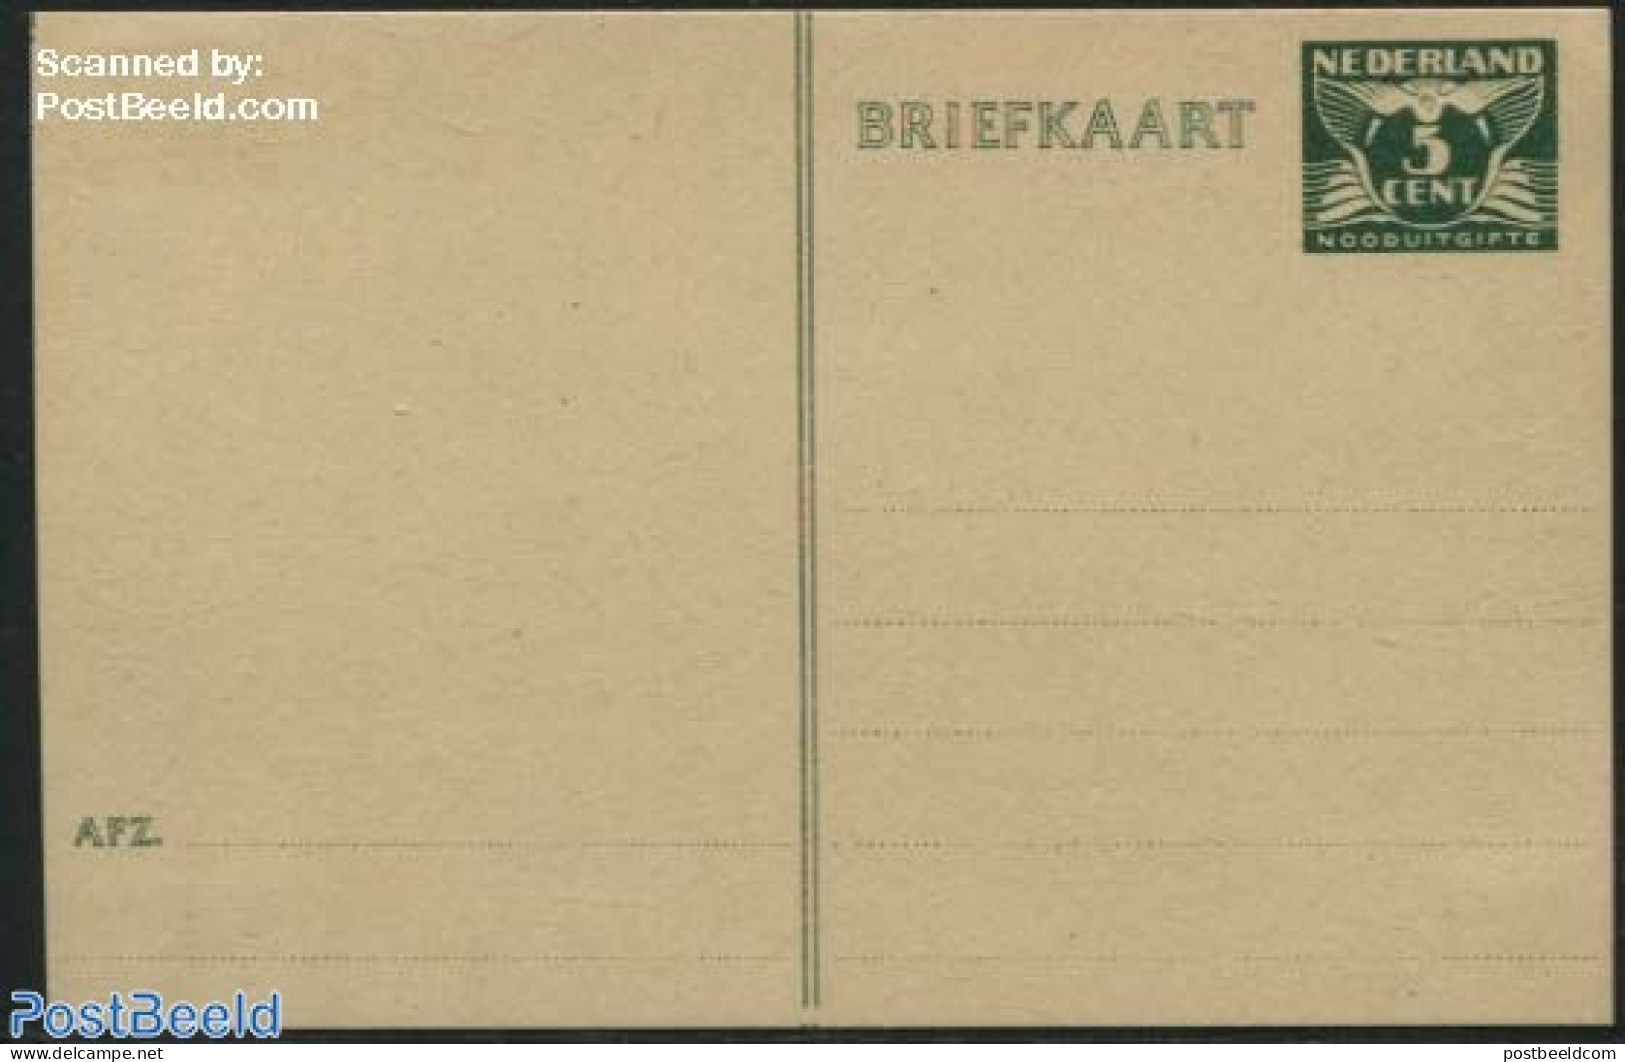 Netherlands 1945 Postcard 5c Nooduitgifte, Cream Paper, Unused Postal Stationary - Lettres & Documents